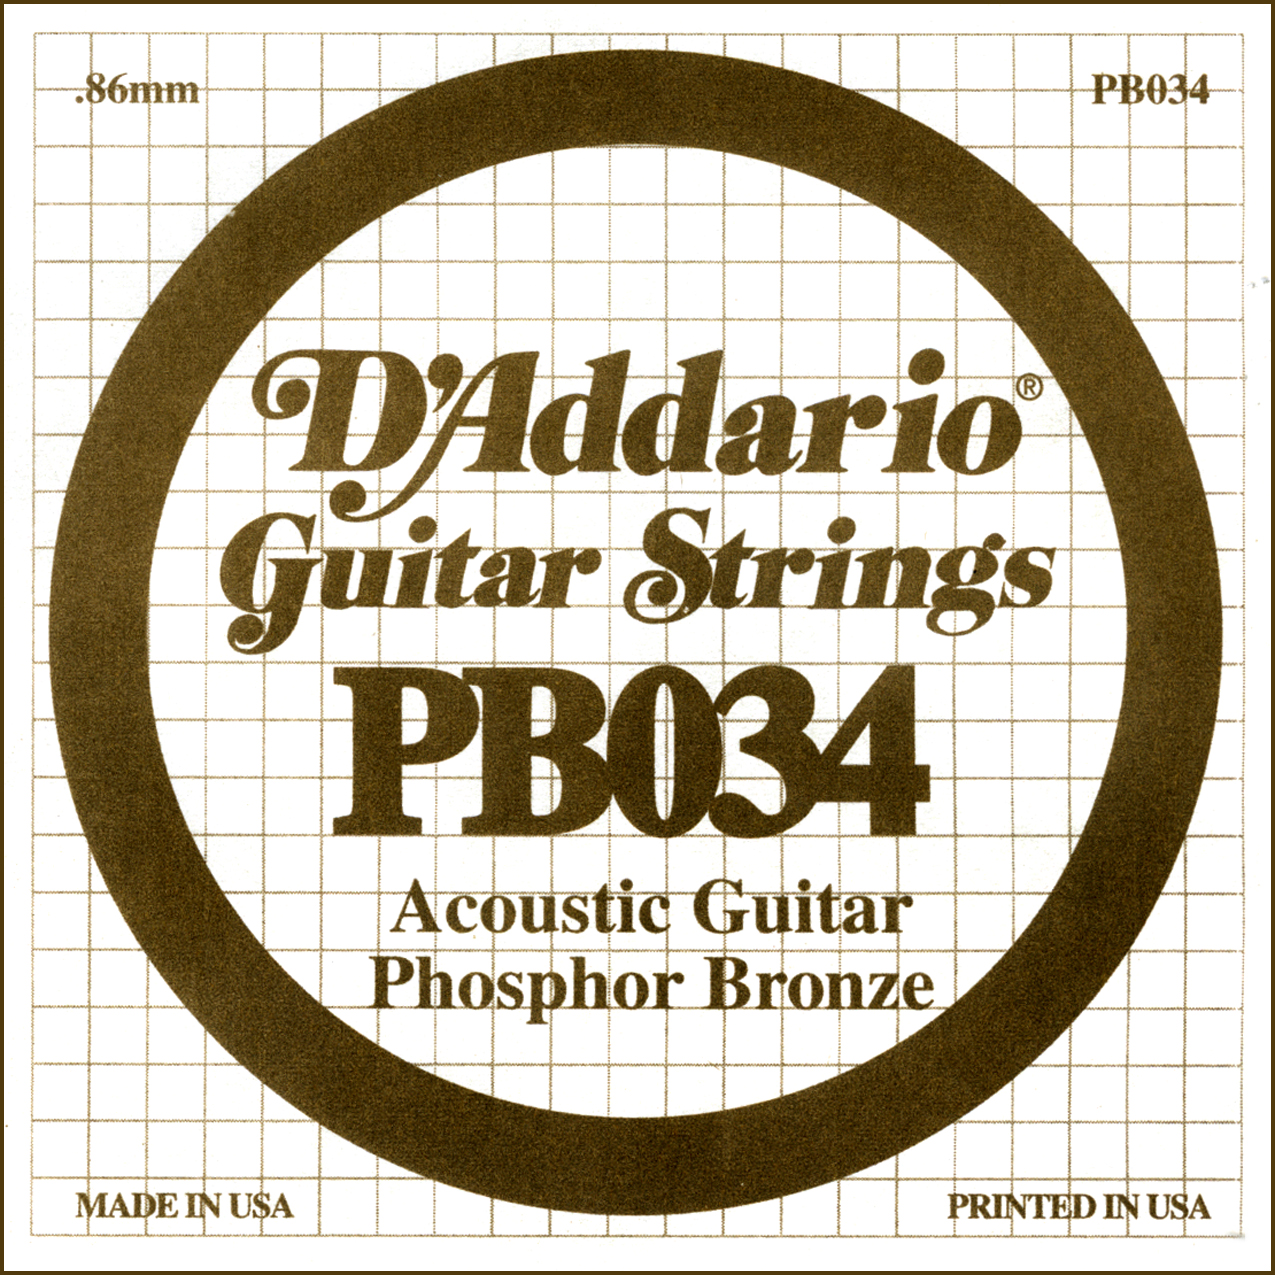 D'Addario PB034 Phosphor Bronze Wound Acoustic Guitar Single String, .034